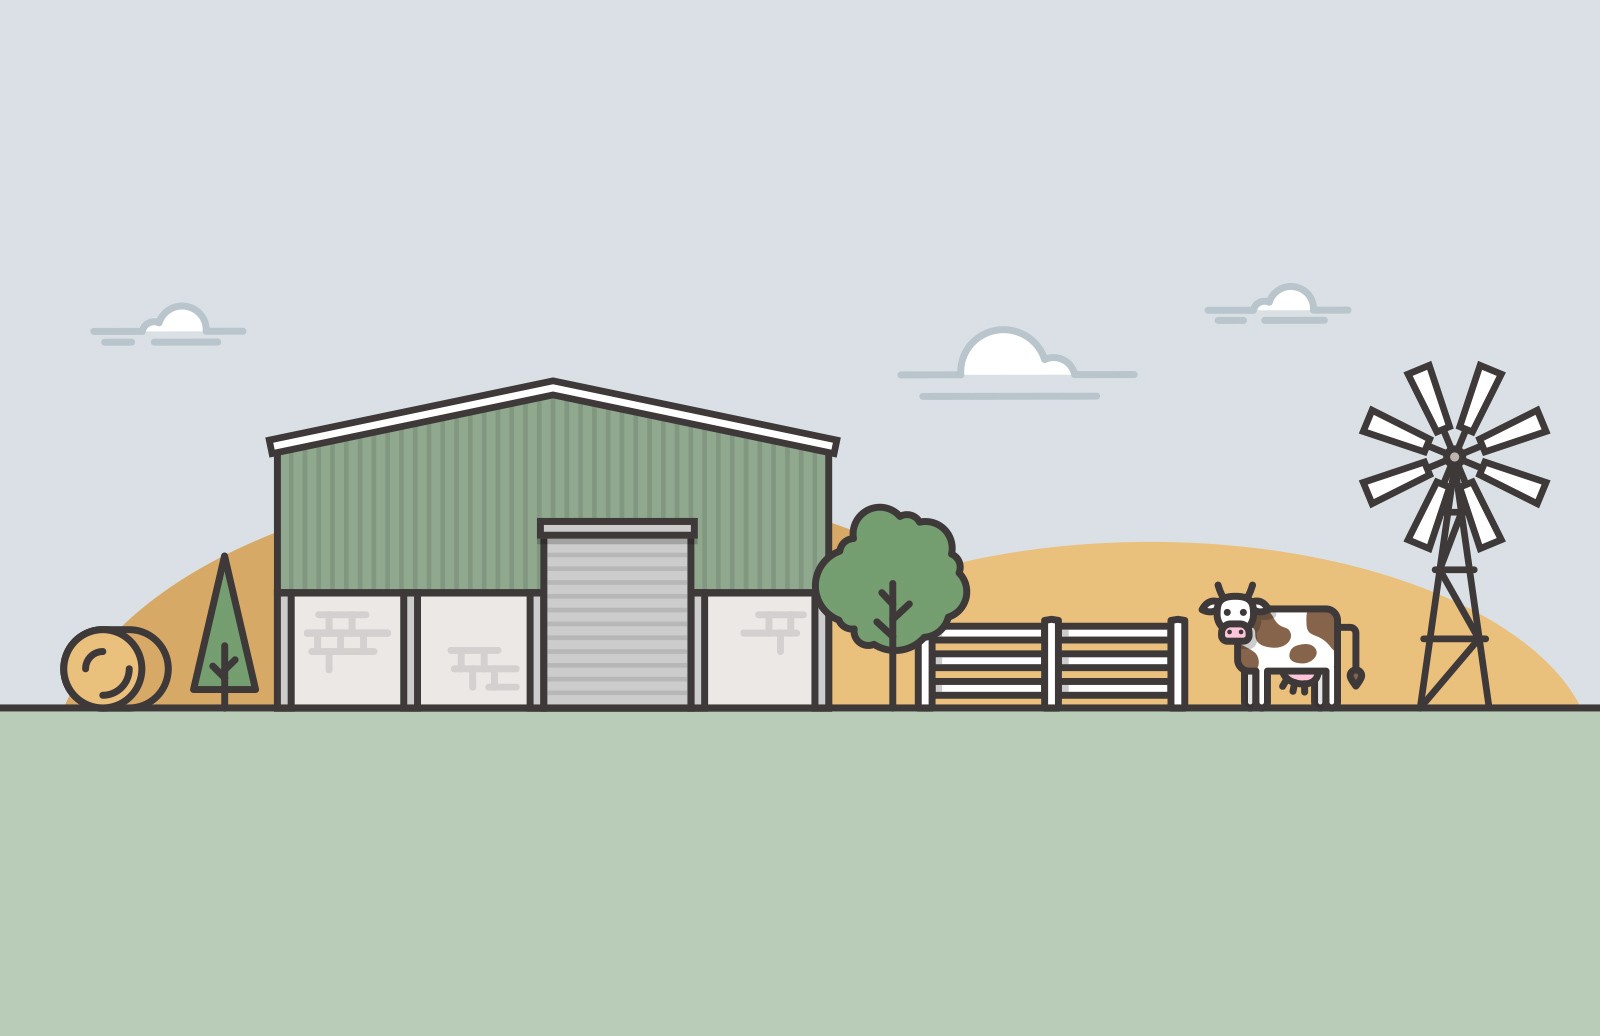 手绘农场元素矢量形状 Farm Vector Illustrations插图(2)